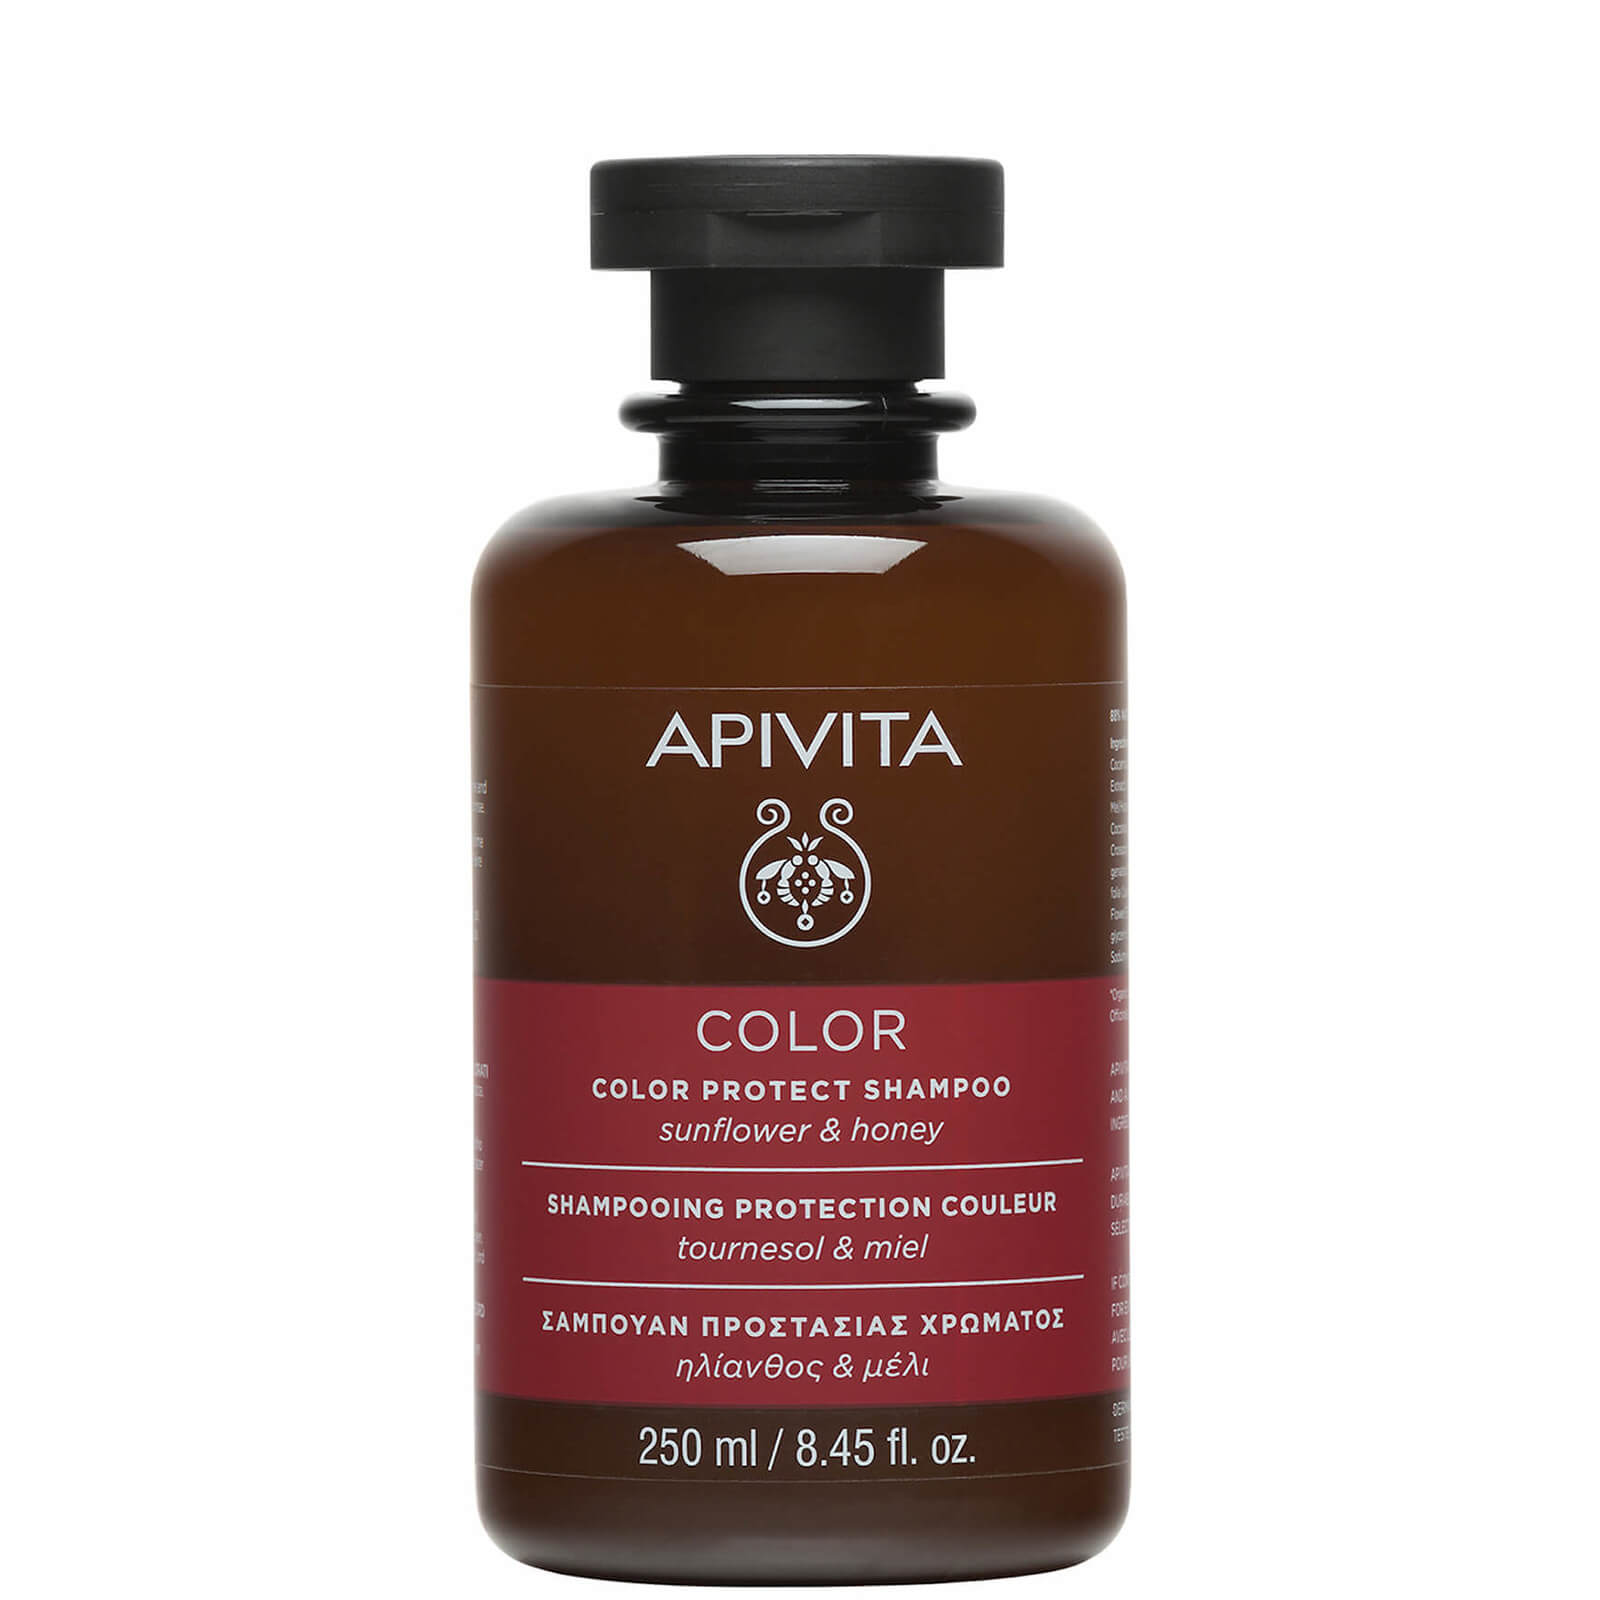 APIVITA 全面护发系列护色洗发水 250ml | 向日葵和蜂蜜